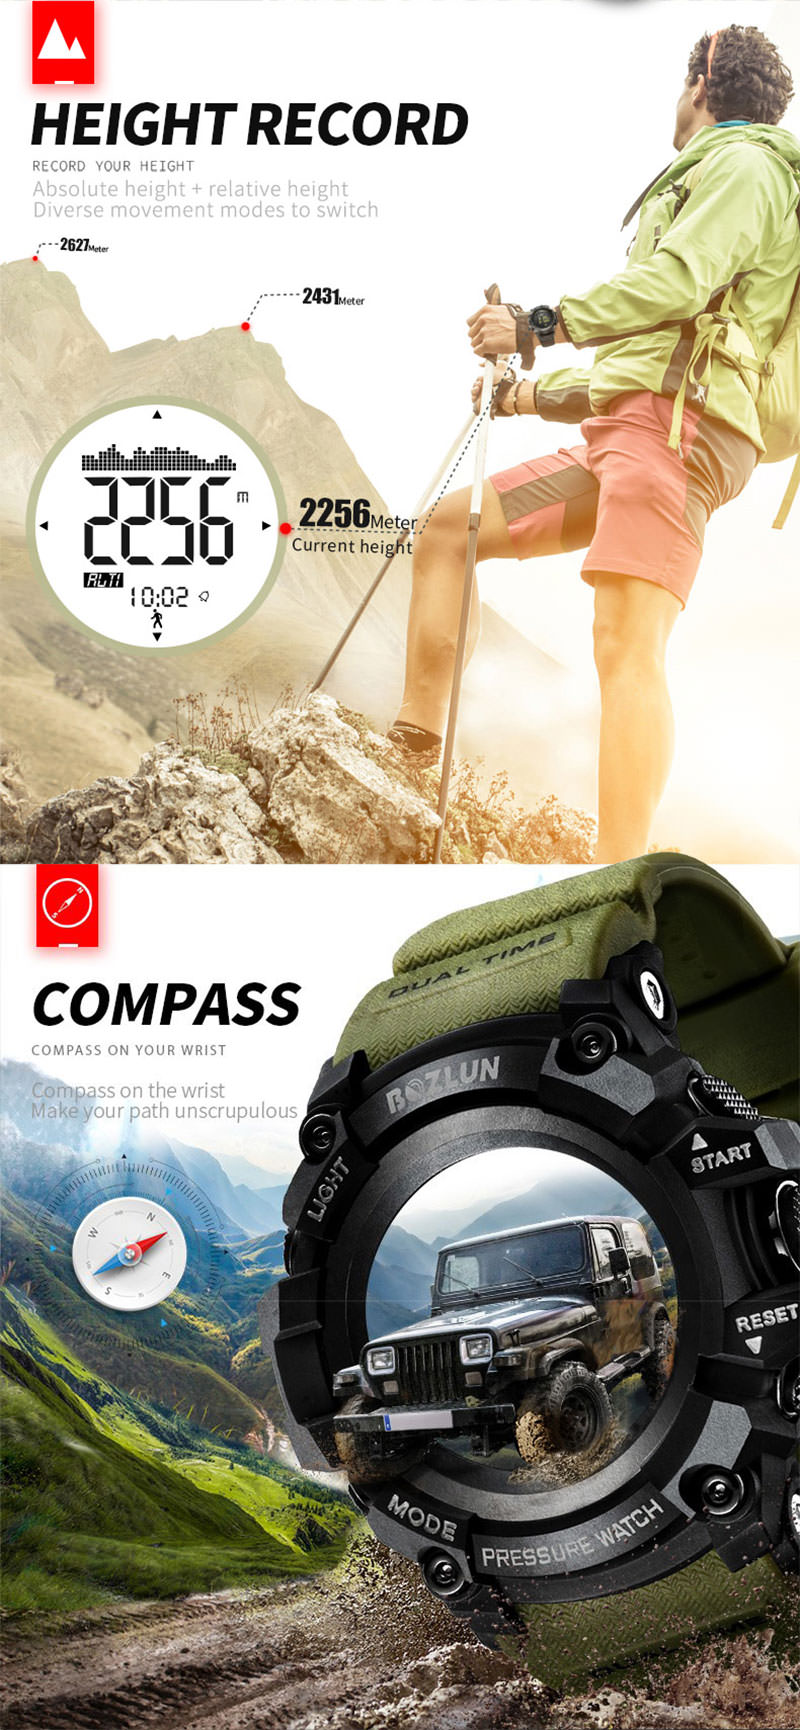 cheap bozlun mg02 outdoor smartwatch